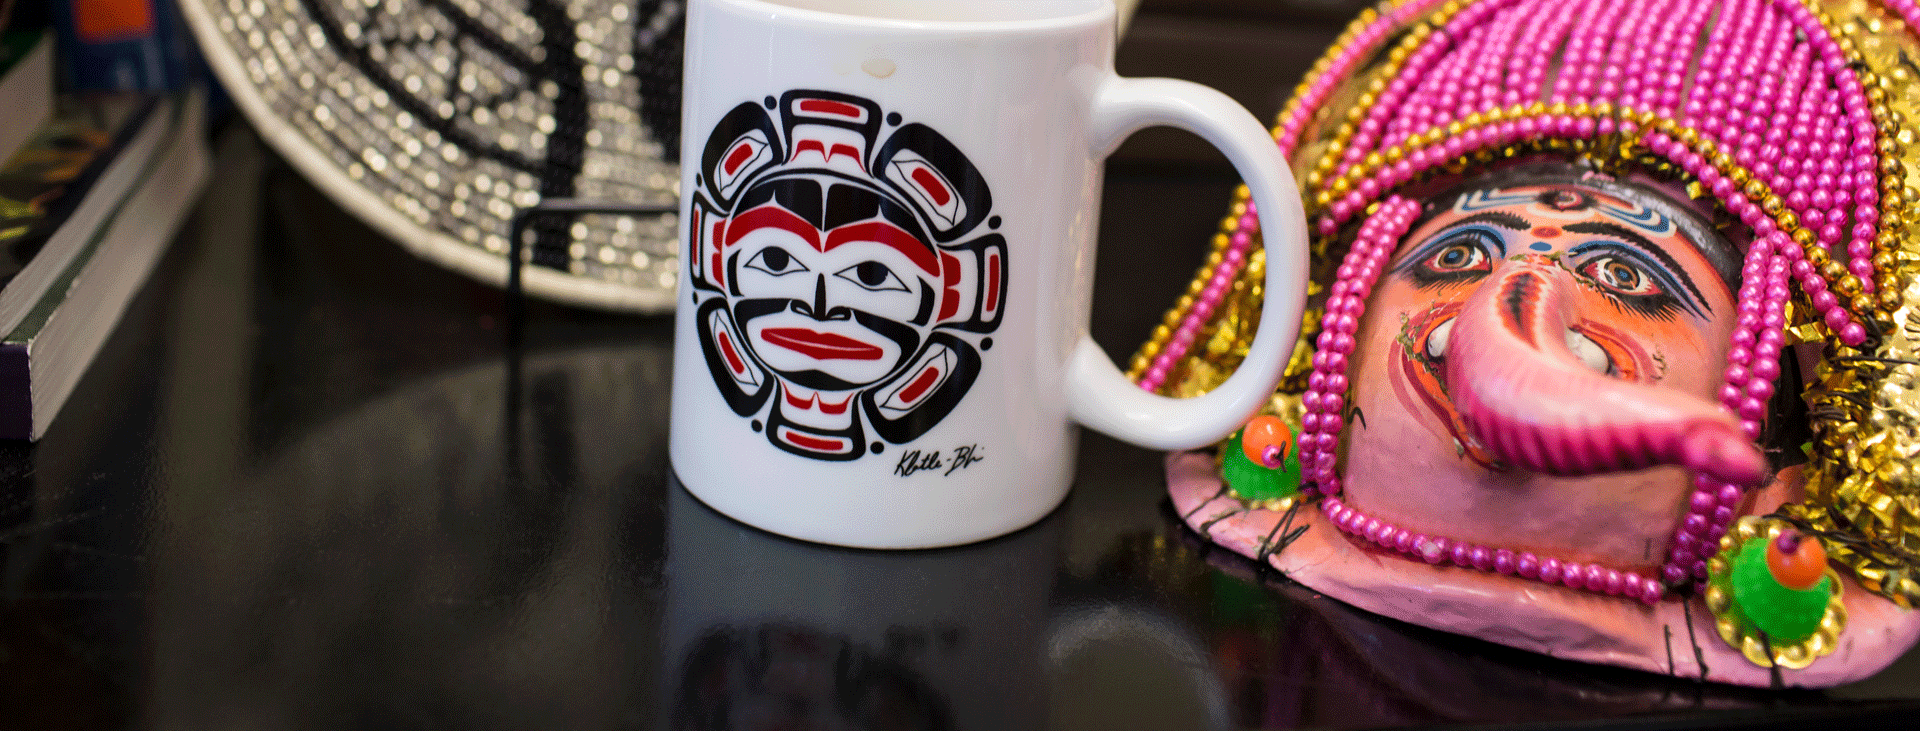 Indigenous pattern on a mug and a decorative mask